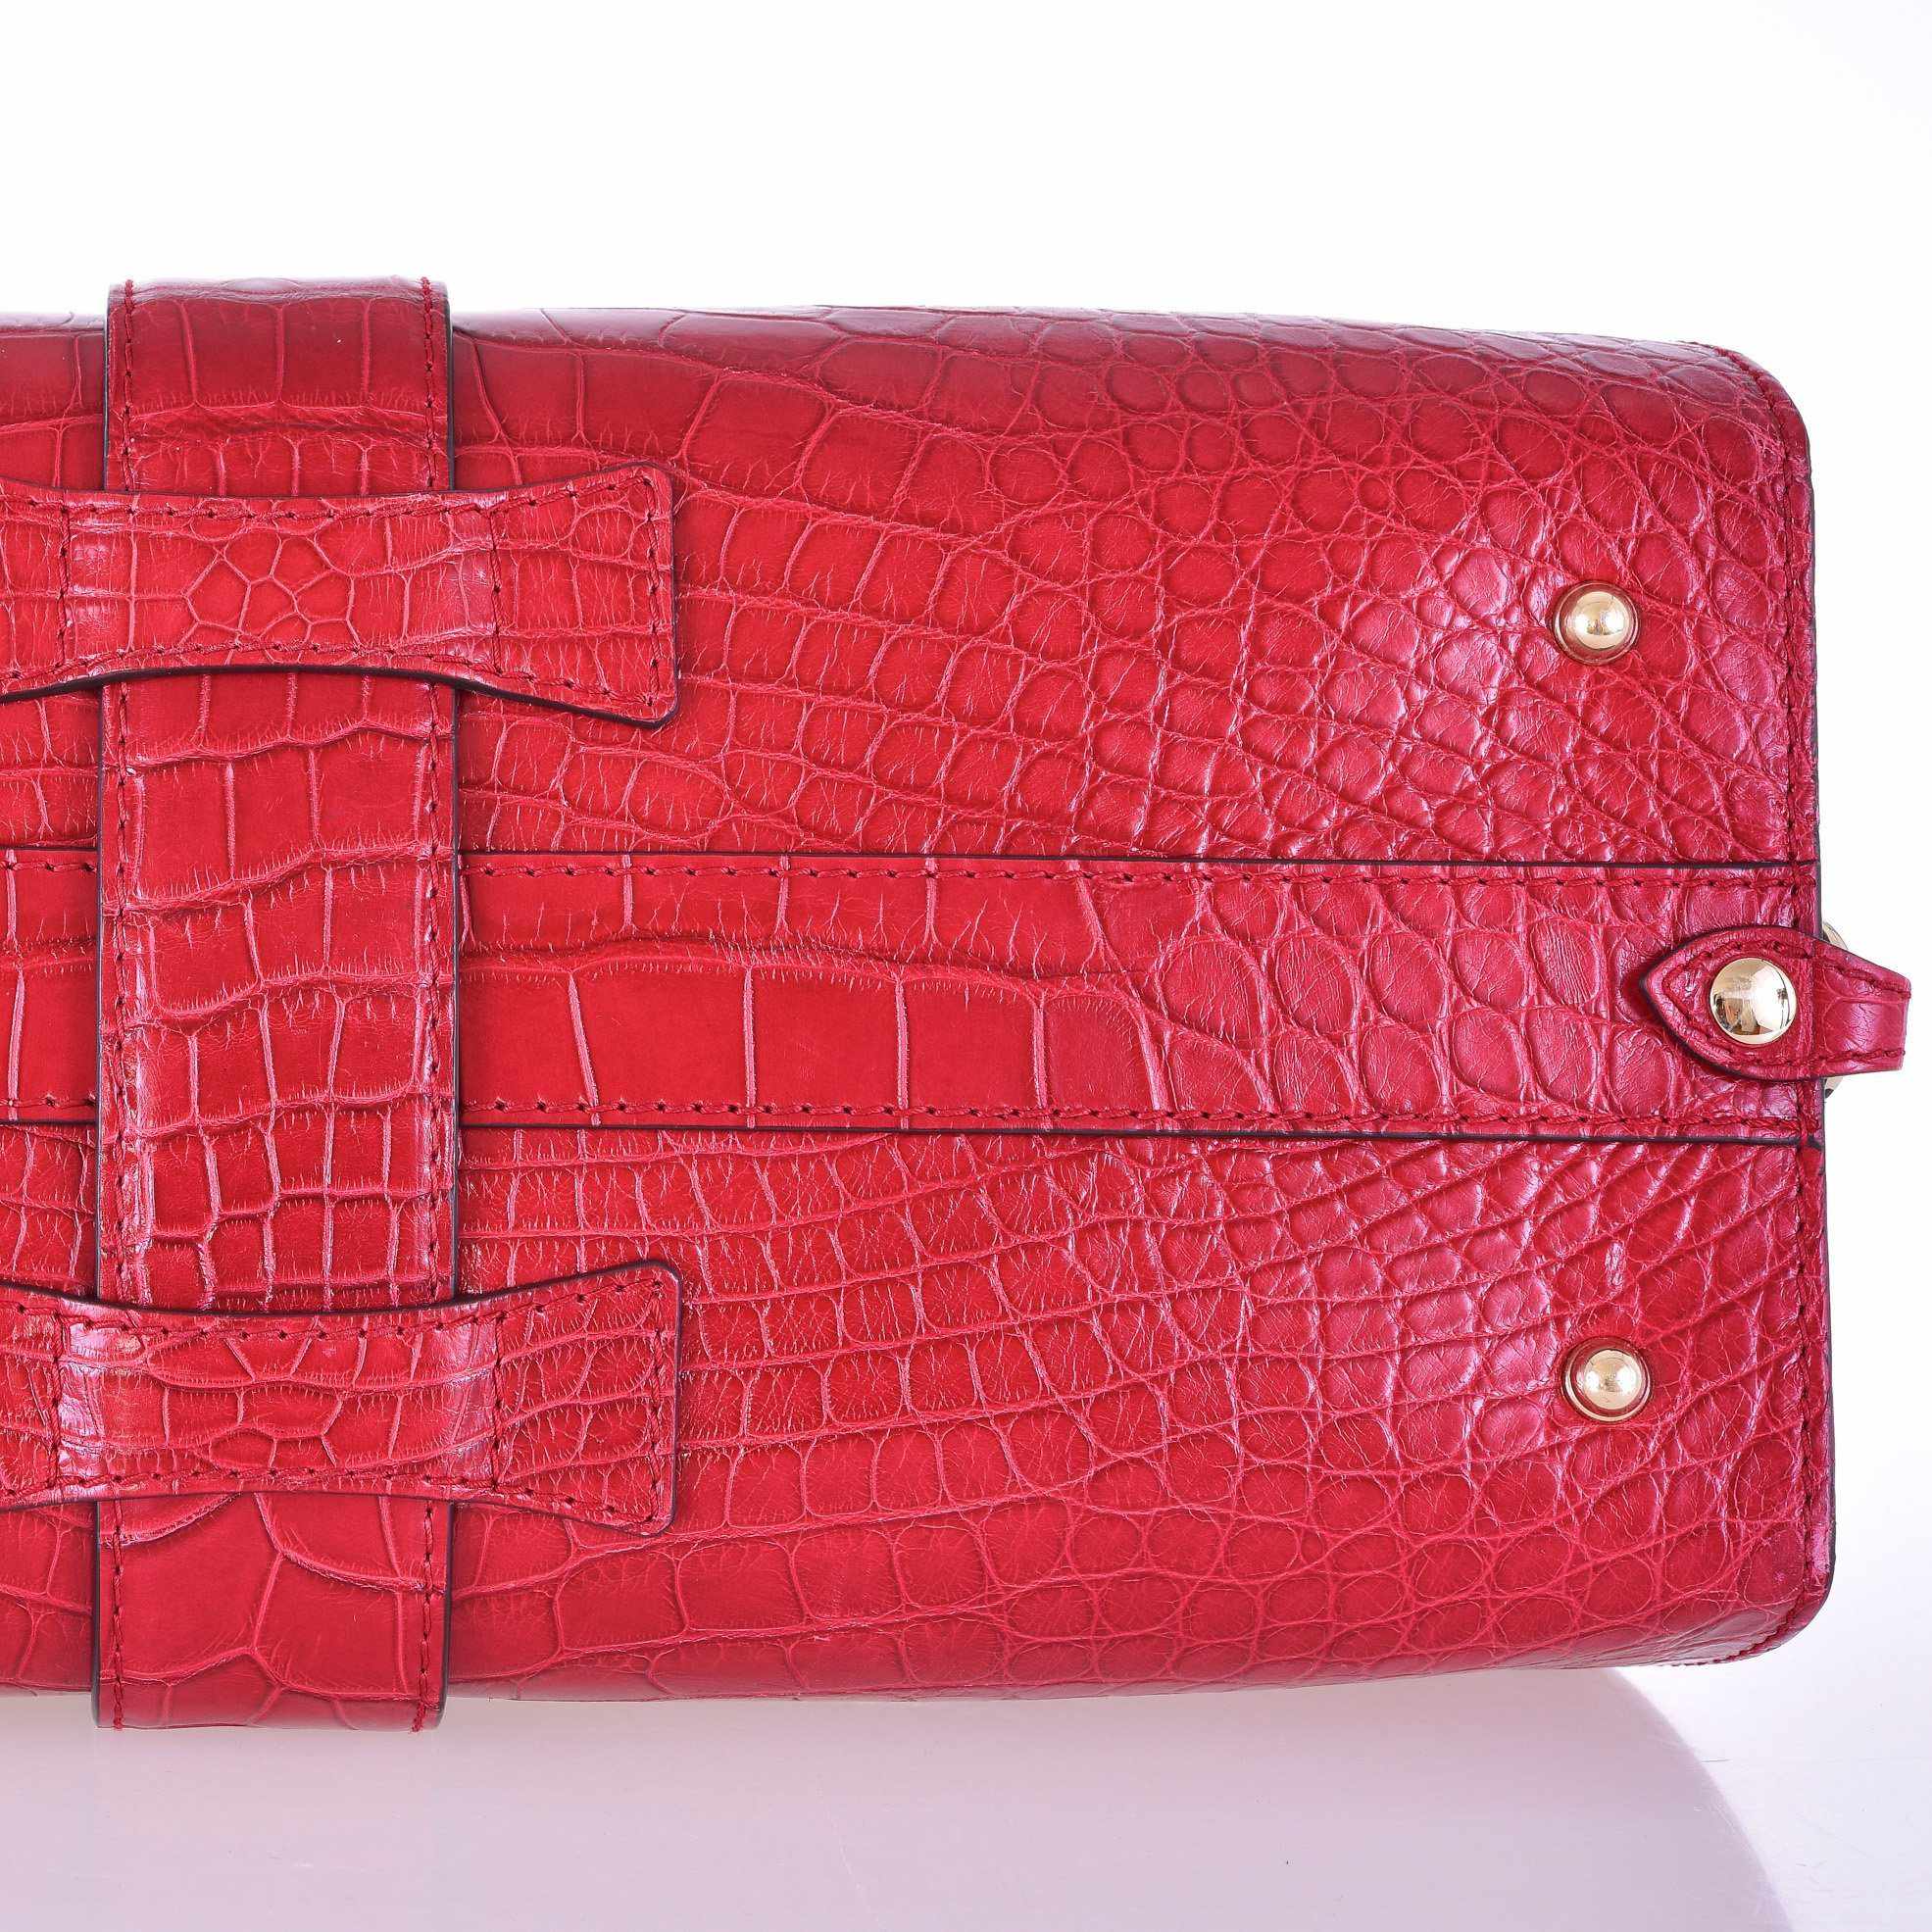 Gucci Stirrup Red Crocodile Top Handle Bag